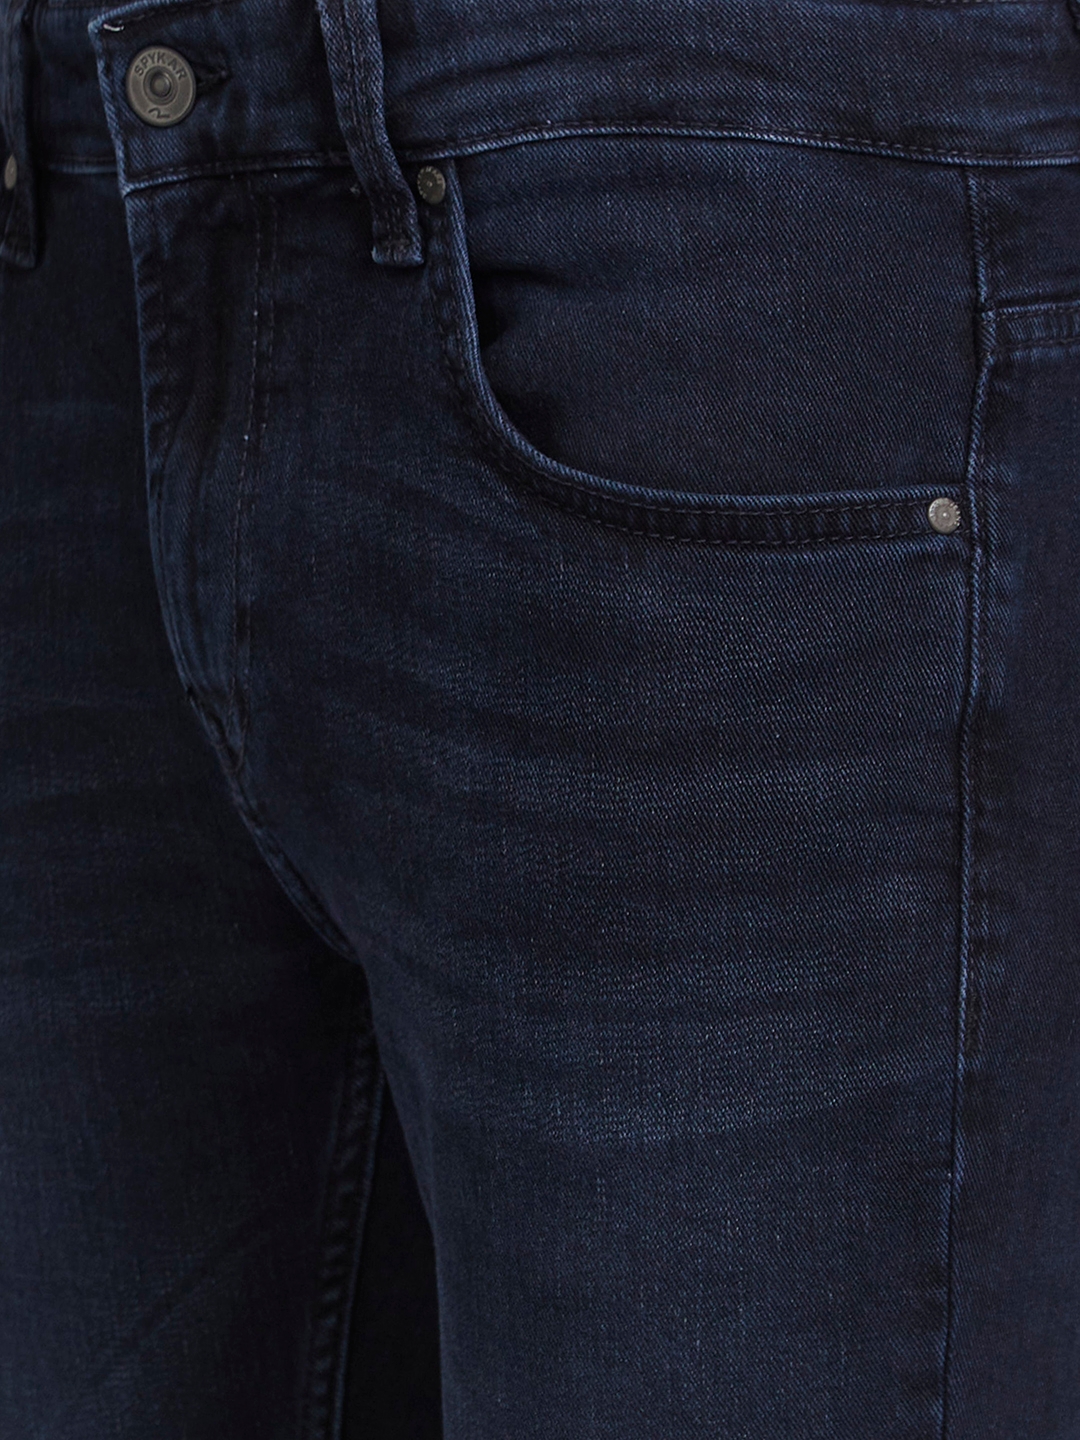 spykar | Spykar Men Charcoal Black Cotton Stretch Super Slim Fit Tapered Length Clean Look Low Rise Jeans - (Super Skinny) 4